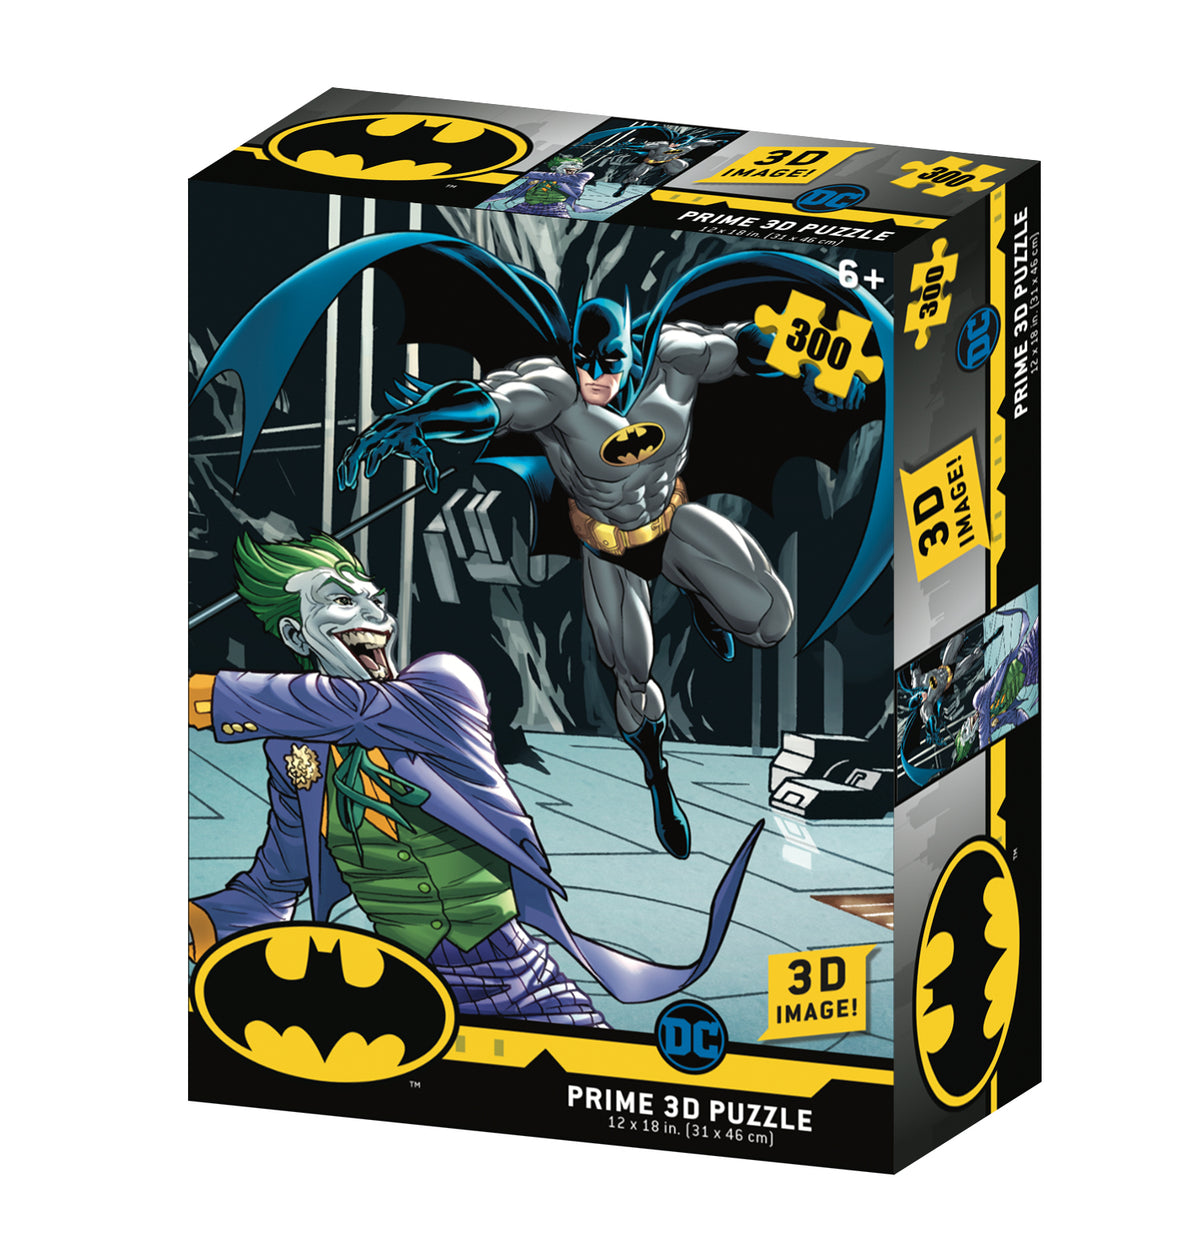 Batman VS Joker DC Comics 3D Jigsaw Puzzle 33002 300pc 18x12"